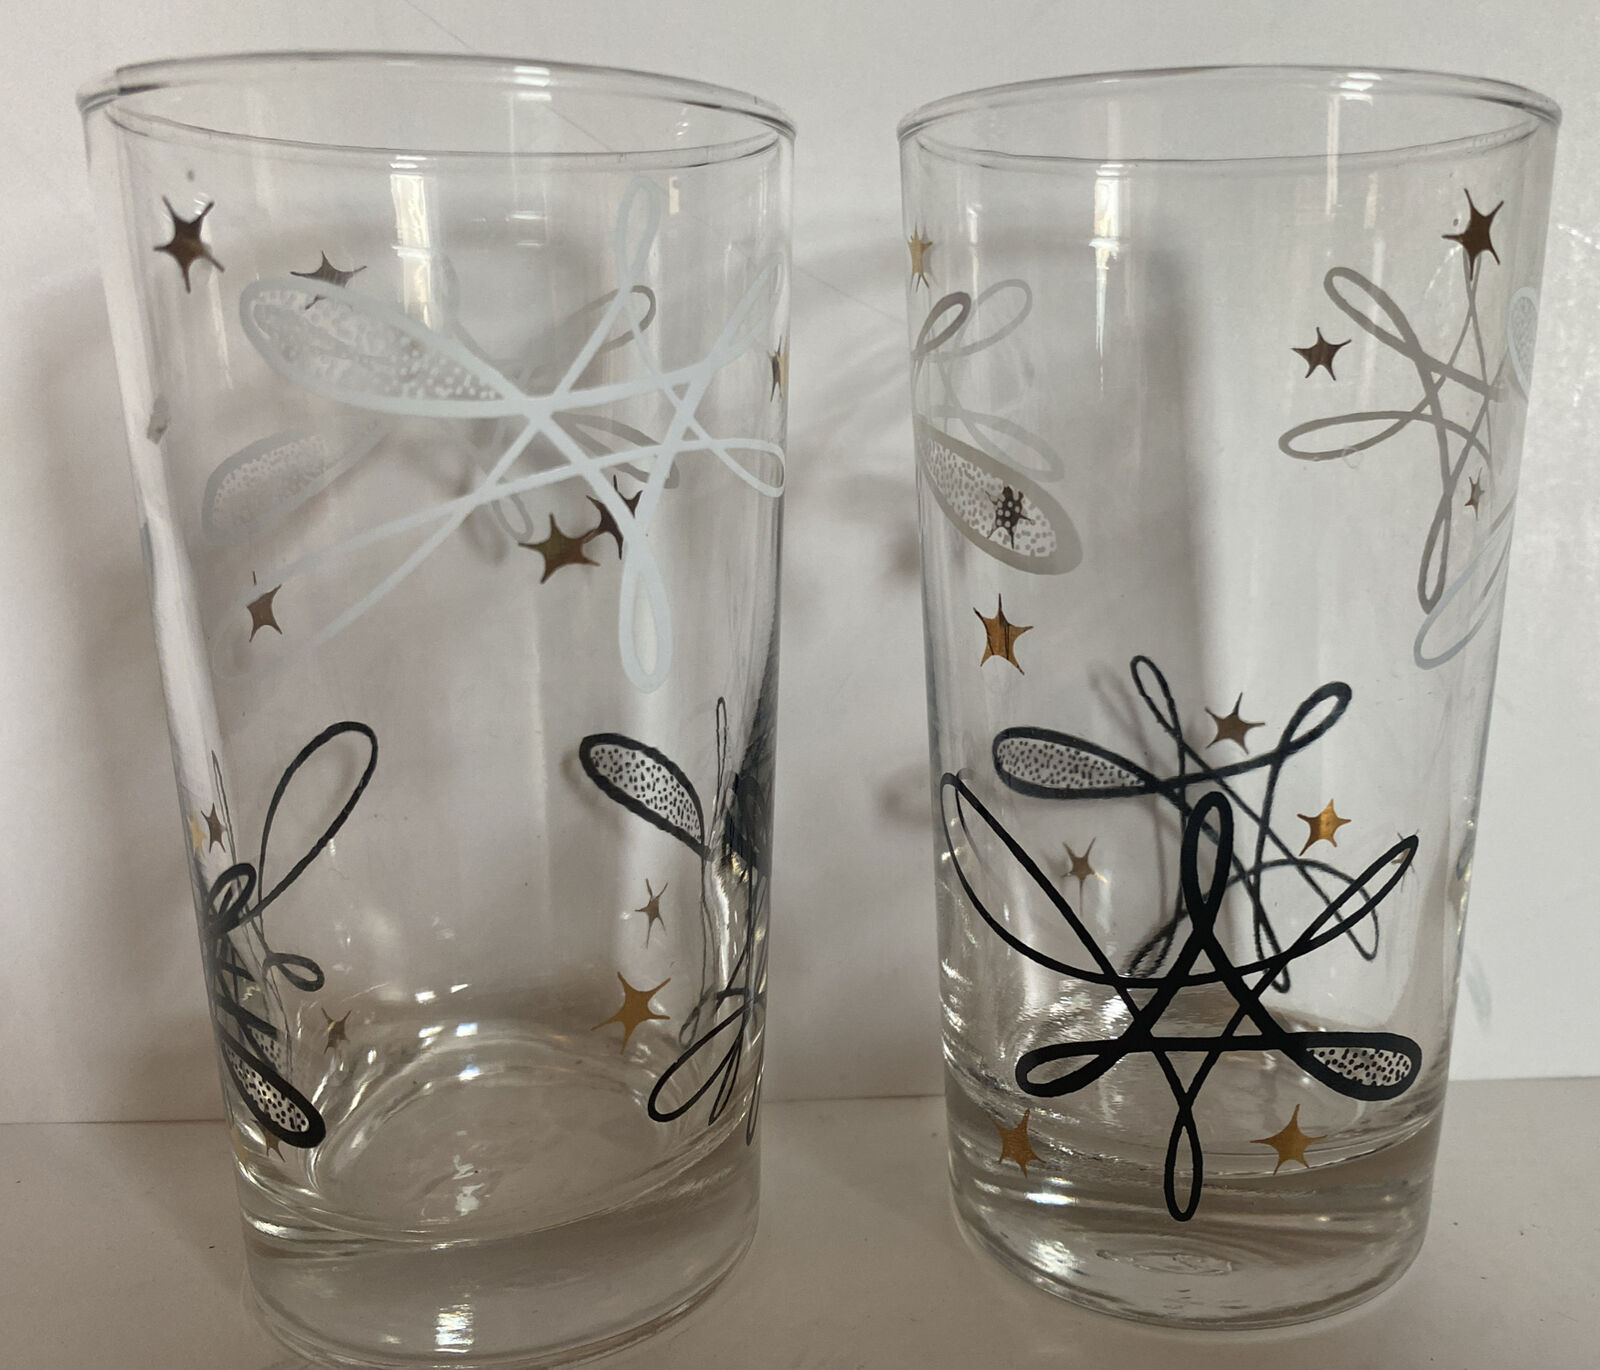 Set of 2 Vintage Atomic Tumbler Glasses Gold Black White Star Design